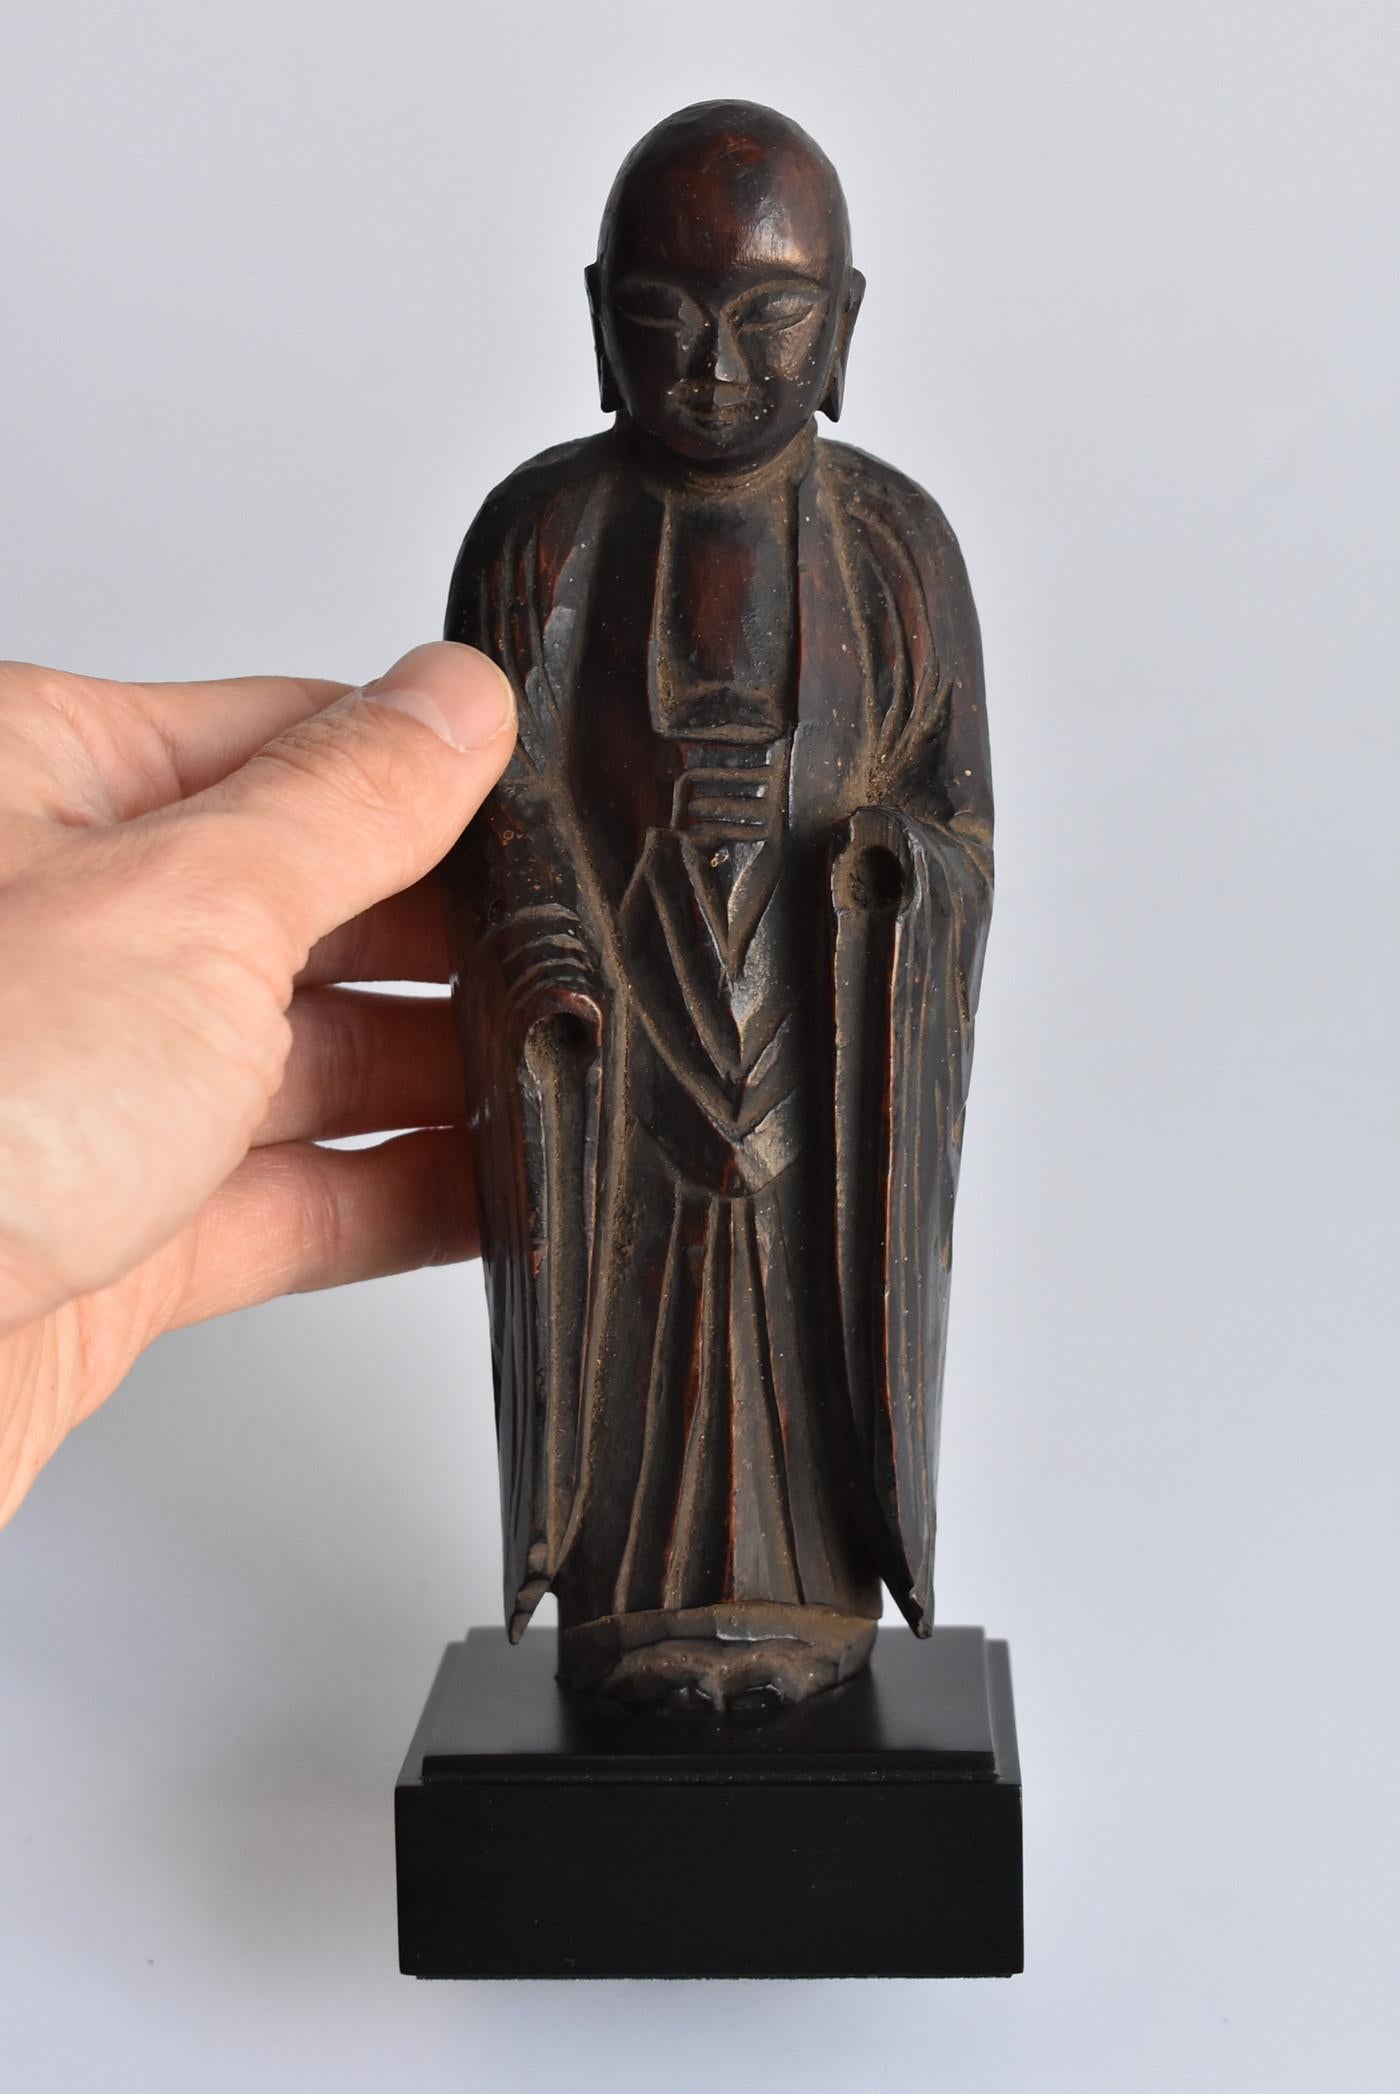 1600s-1800s Japanese Wood Carving Jizo Bodhisattva or Buddha Statue Edo Period 10